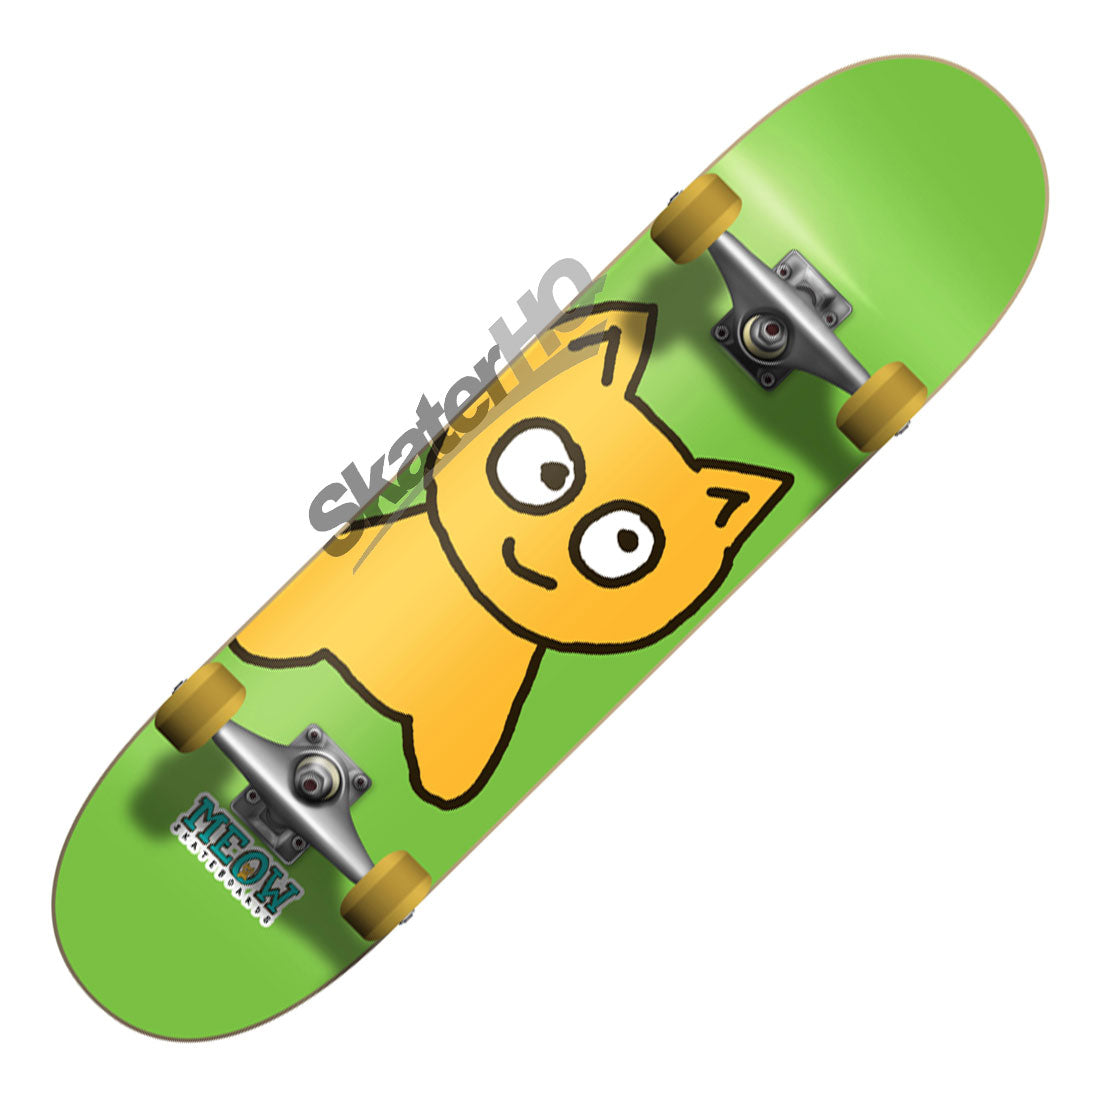 Meow Big Cat 7.5 Complete - Green Skateboard Completes Modern Street